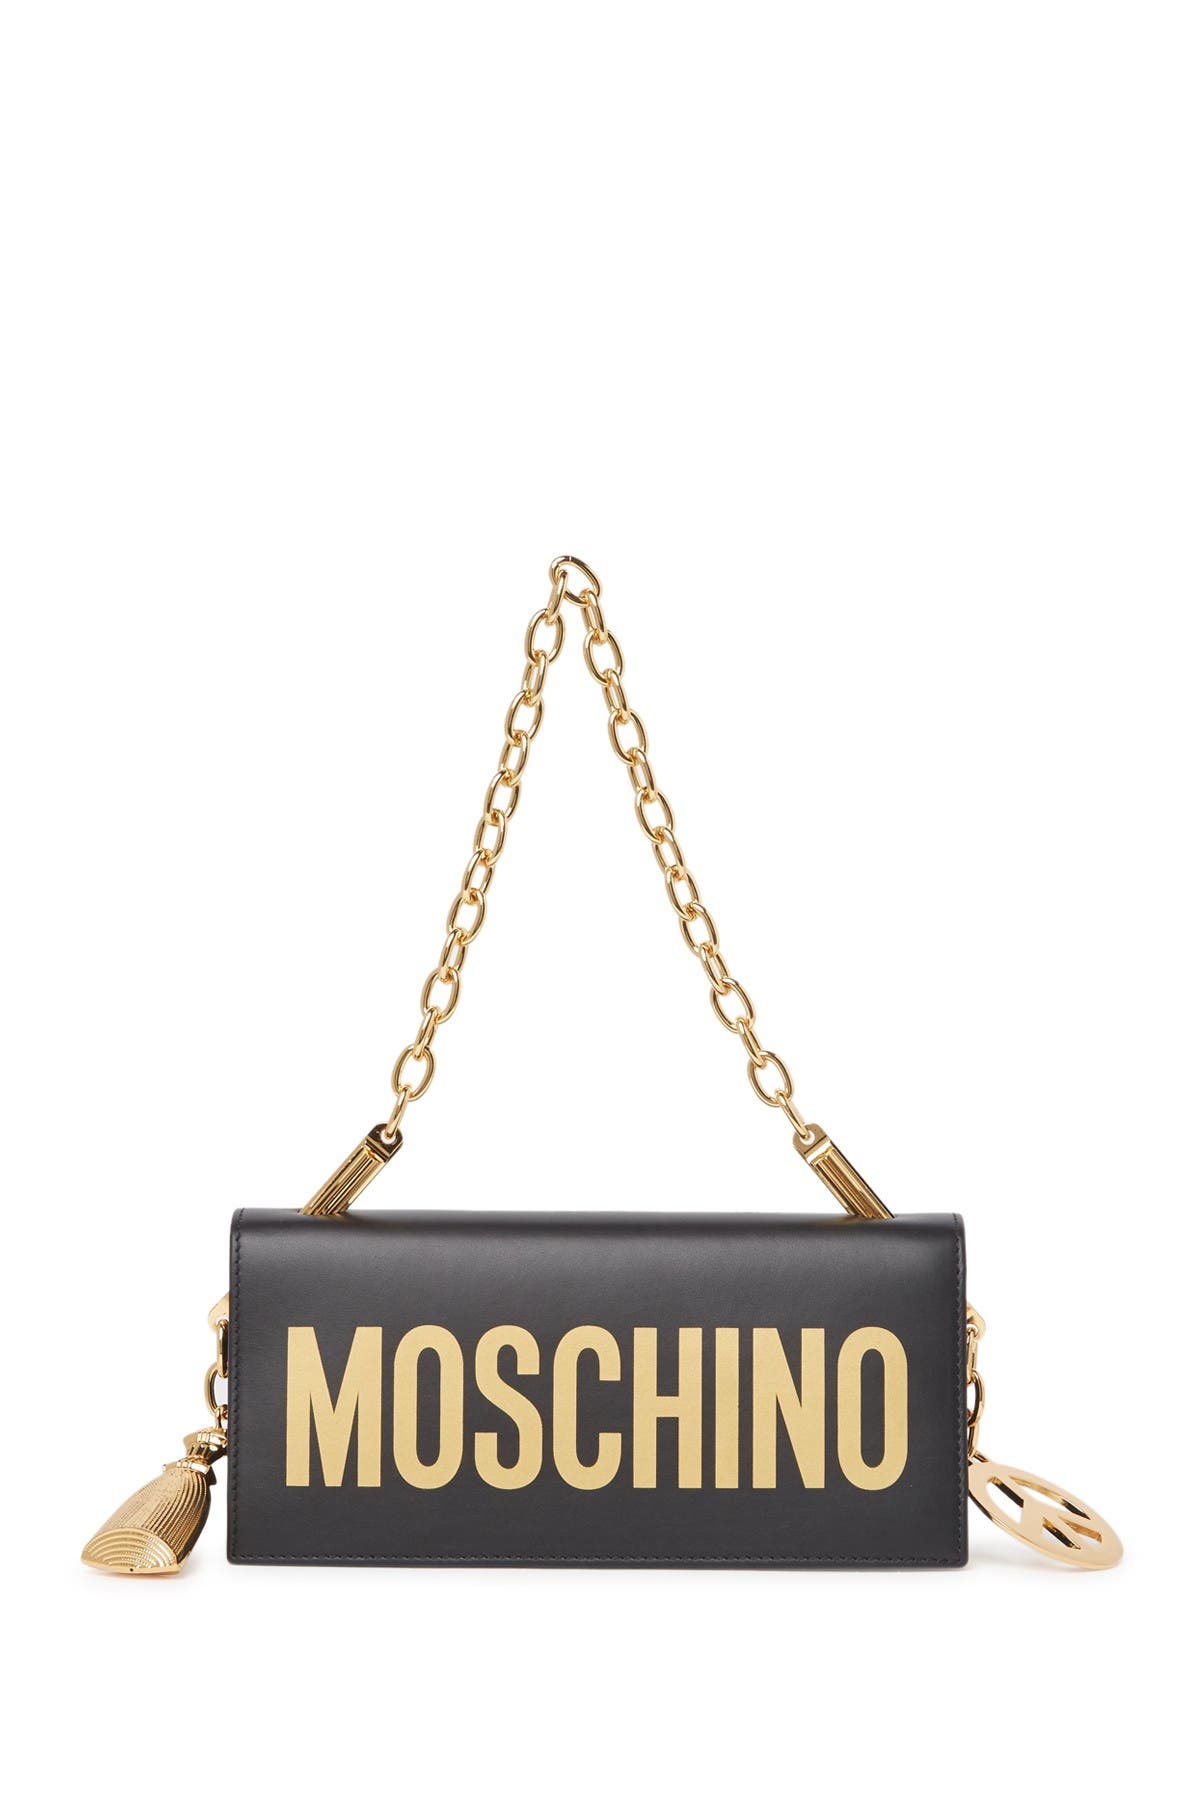 MOSCHINO LOGO PRINT LEATHER SHOULDER BAG,195453959774